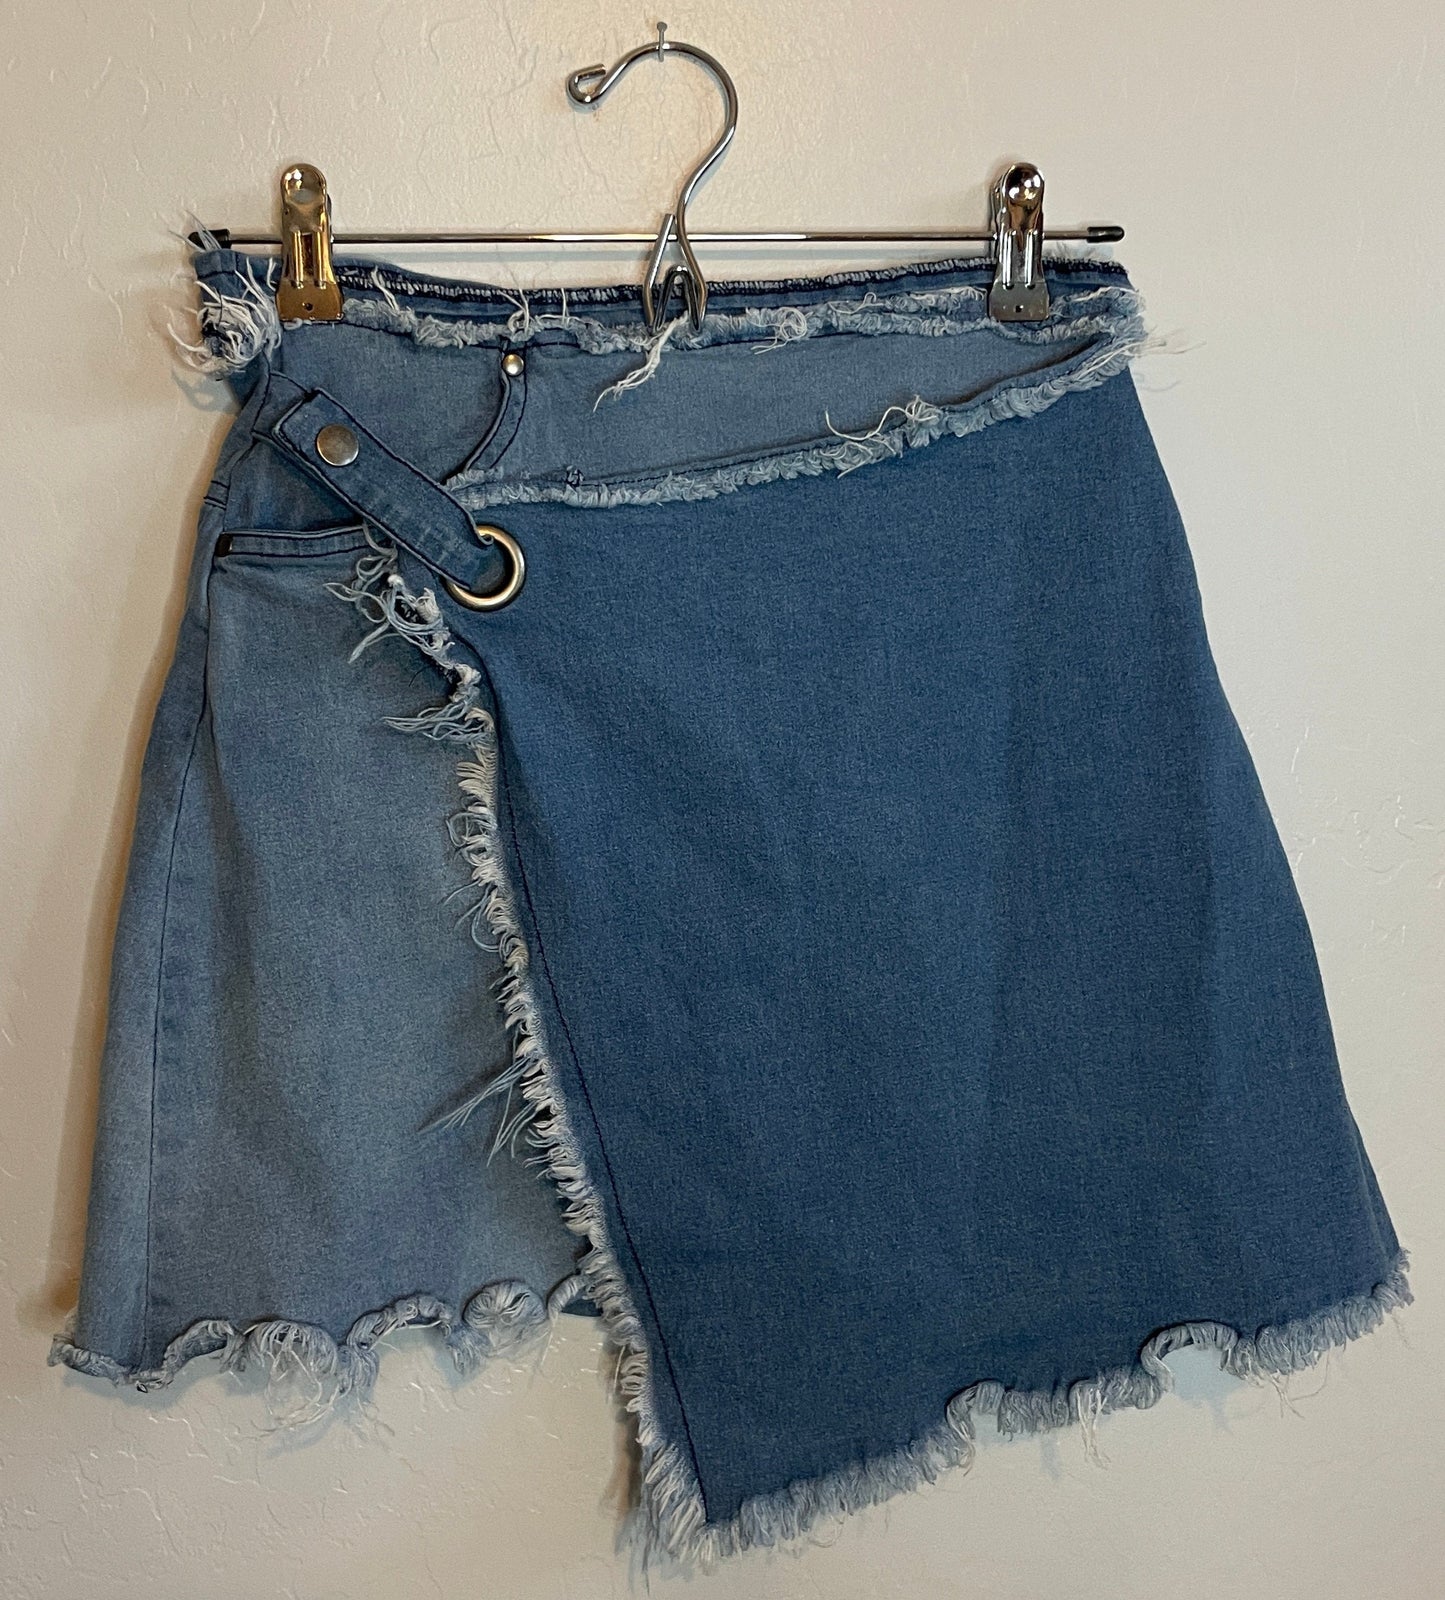 Handmade Denim Skirt with Frayed Edges